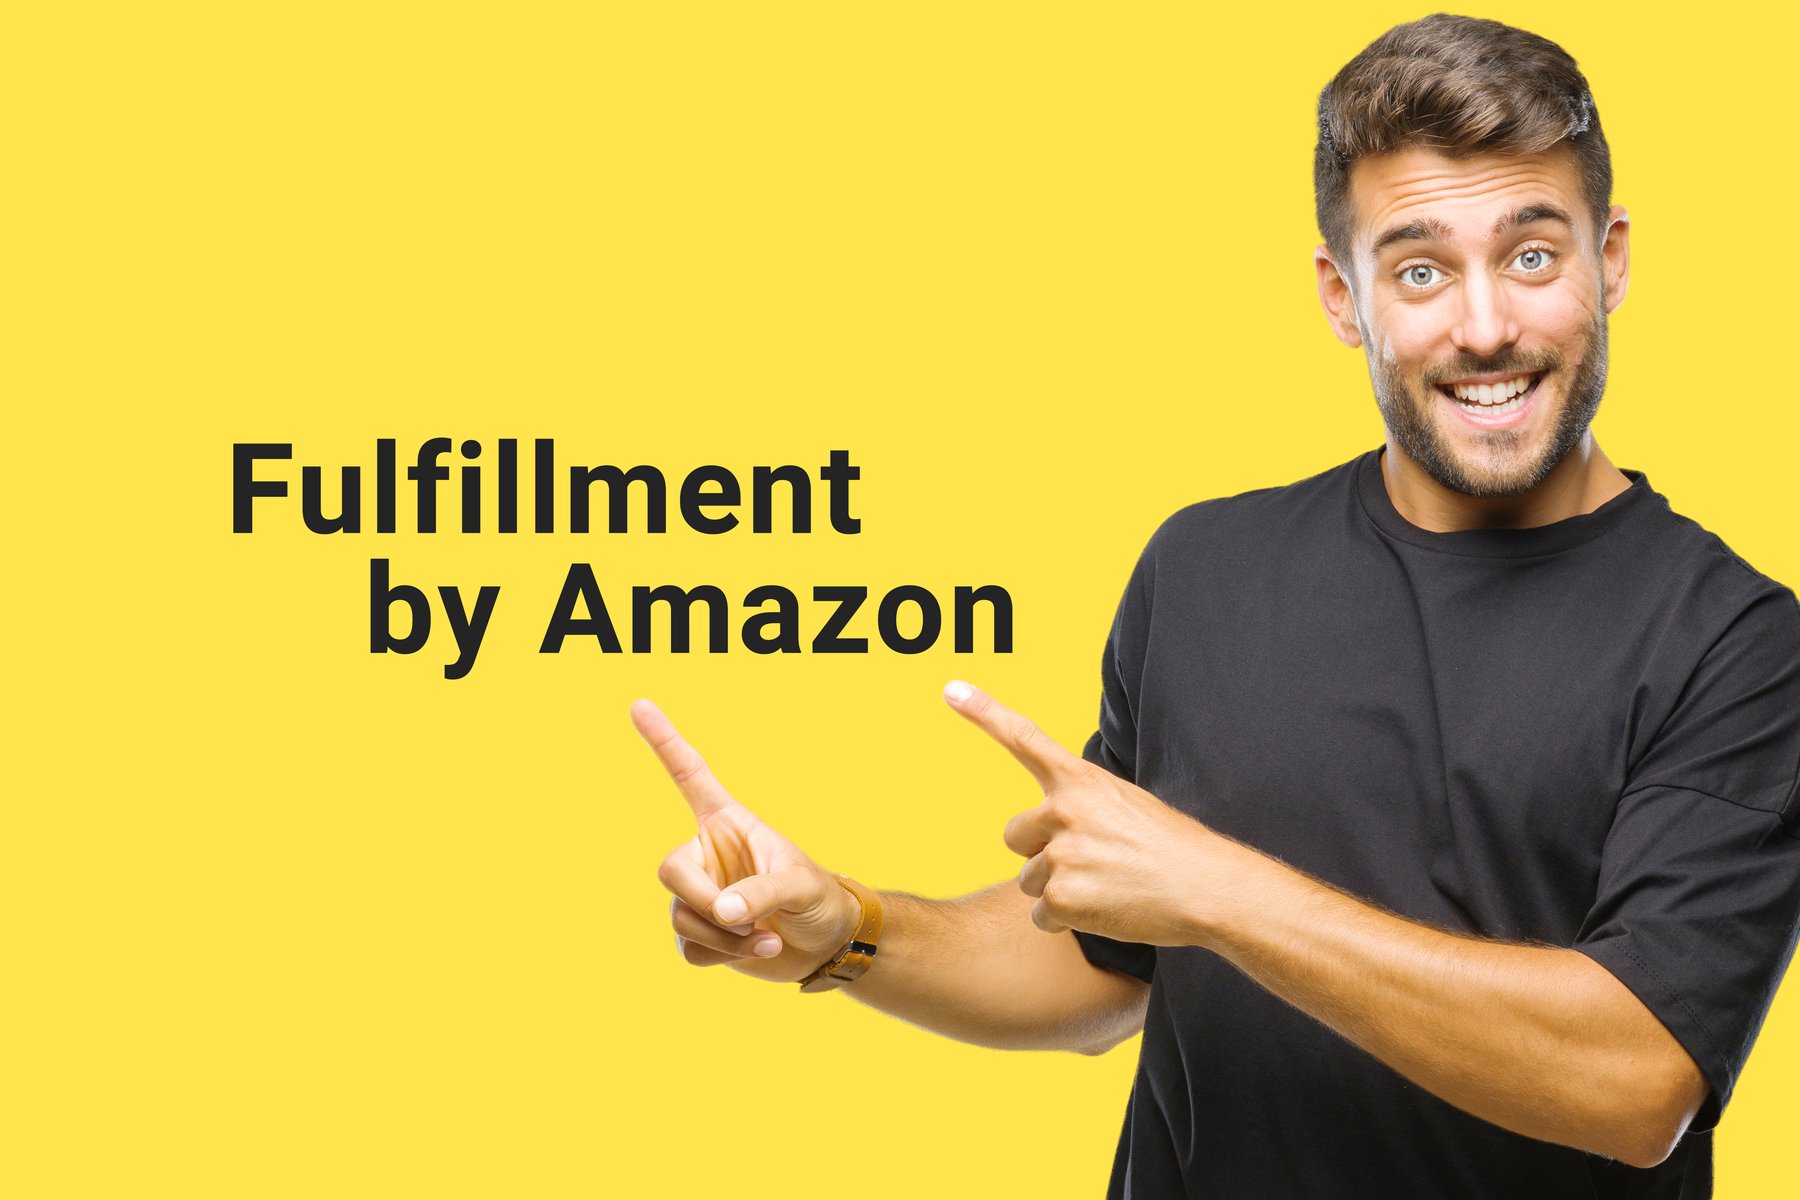 Fulfillment by Amazon - Handel mit Mode Accessoires sucht passende Nachfolge